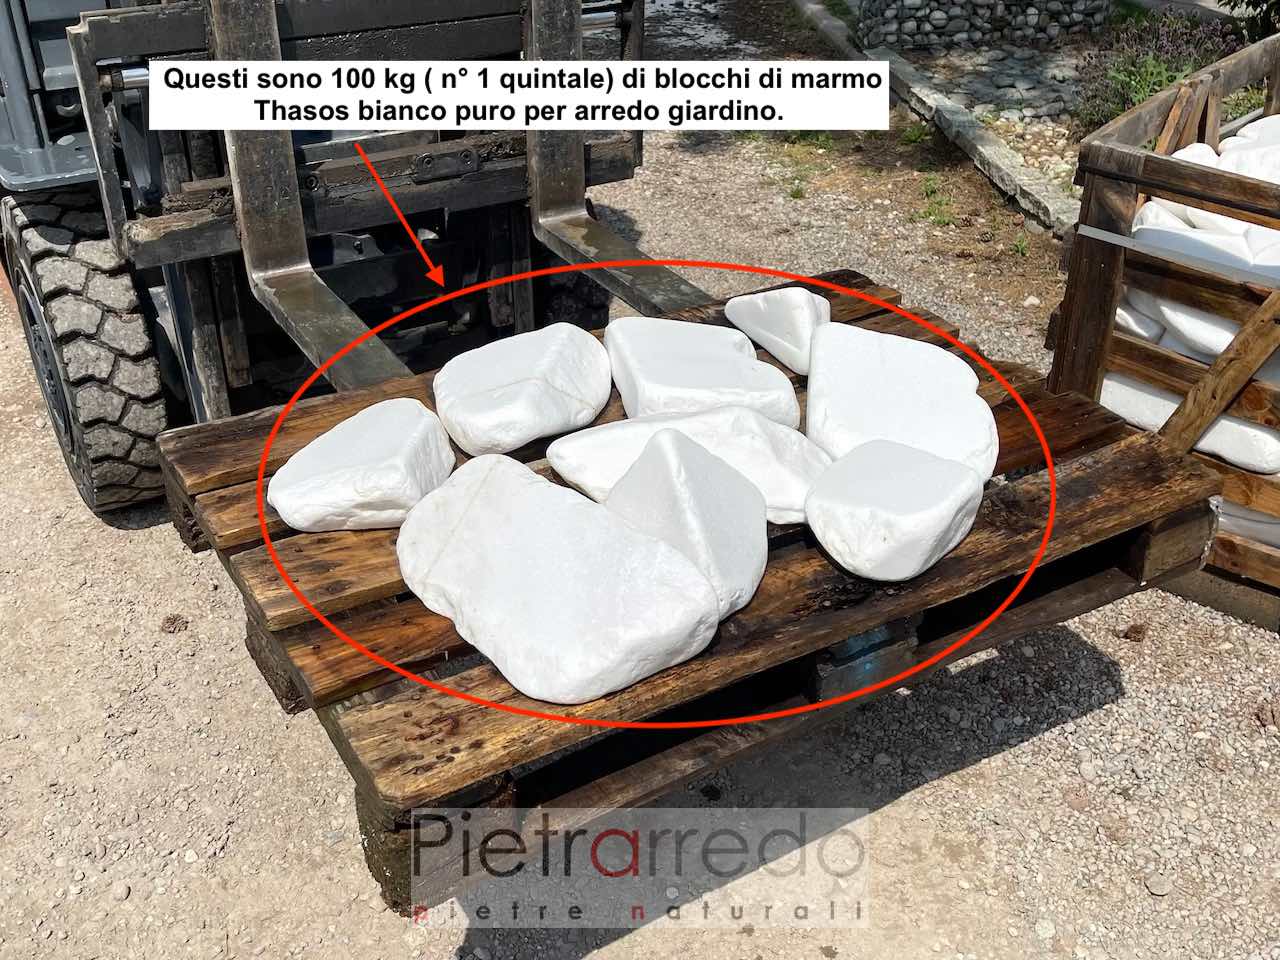 100 kg 1 quintale di blocchi thasos thassos prezzi marmi pietrarredo sconti